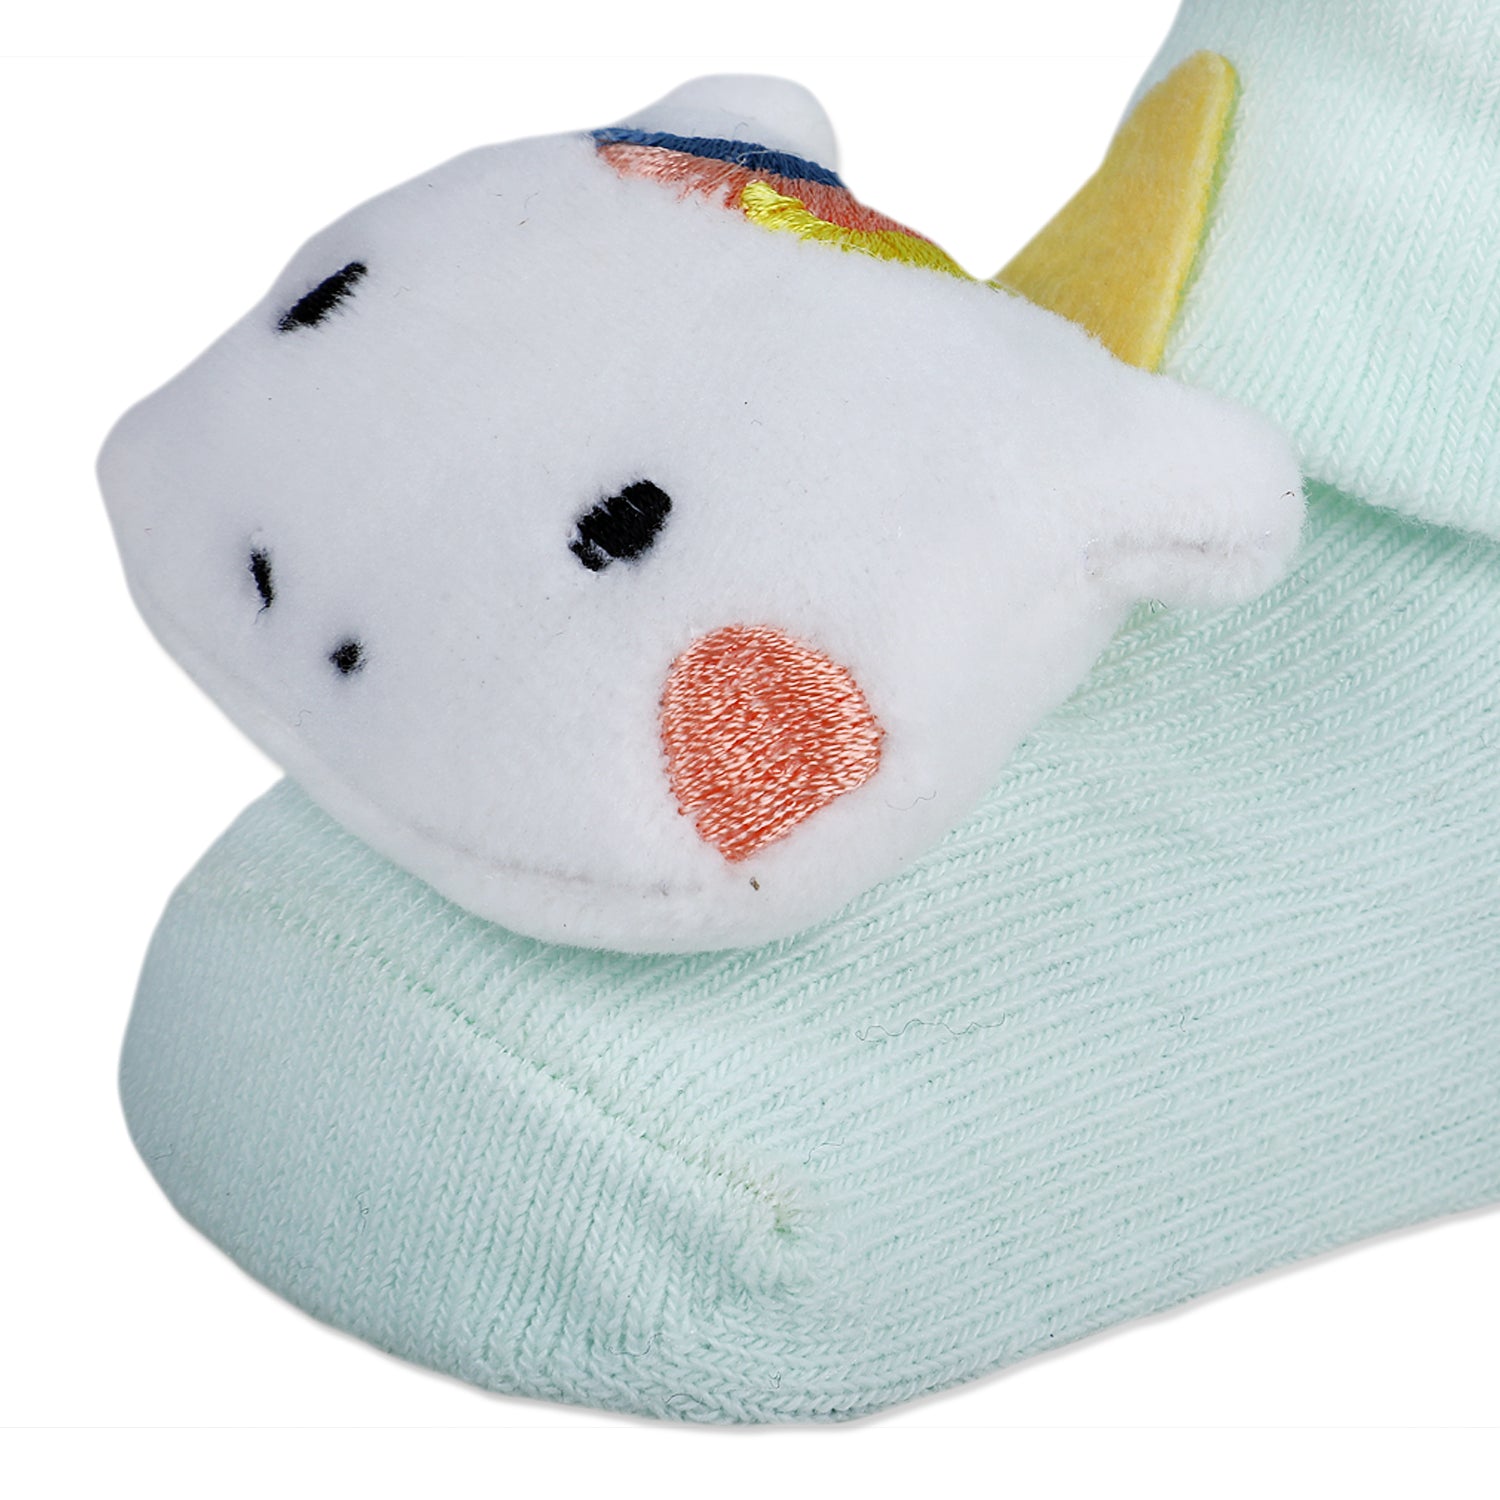 Baby Moo Magical Unicorn Cotton Anti-Skid 3D Socks - Mint Green - Baby Moo